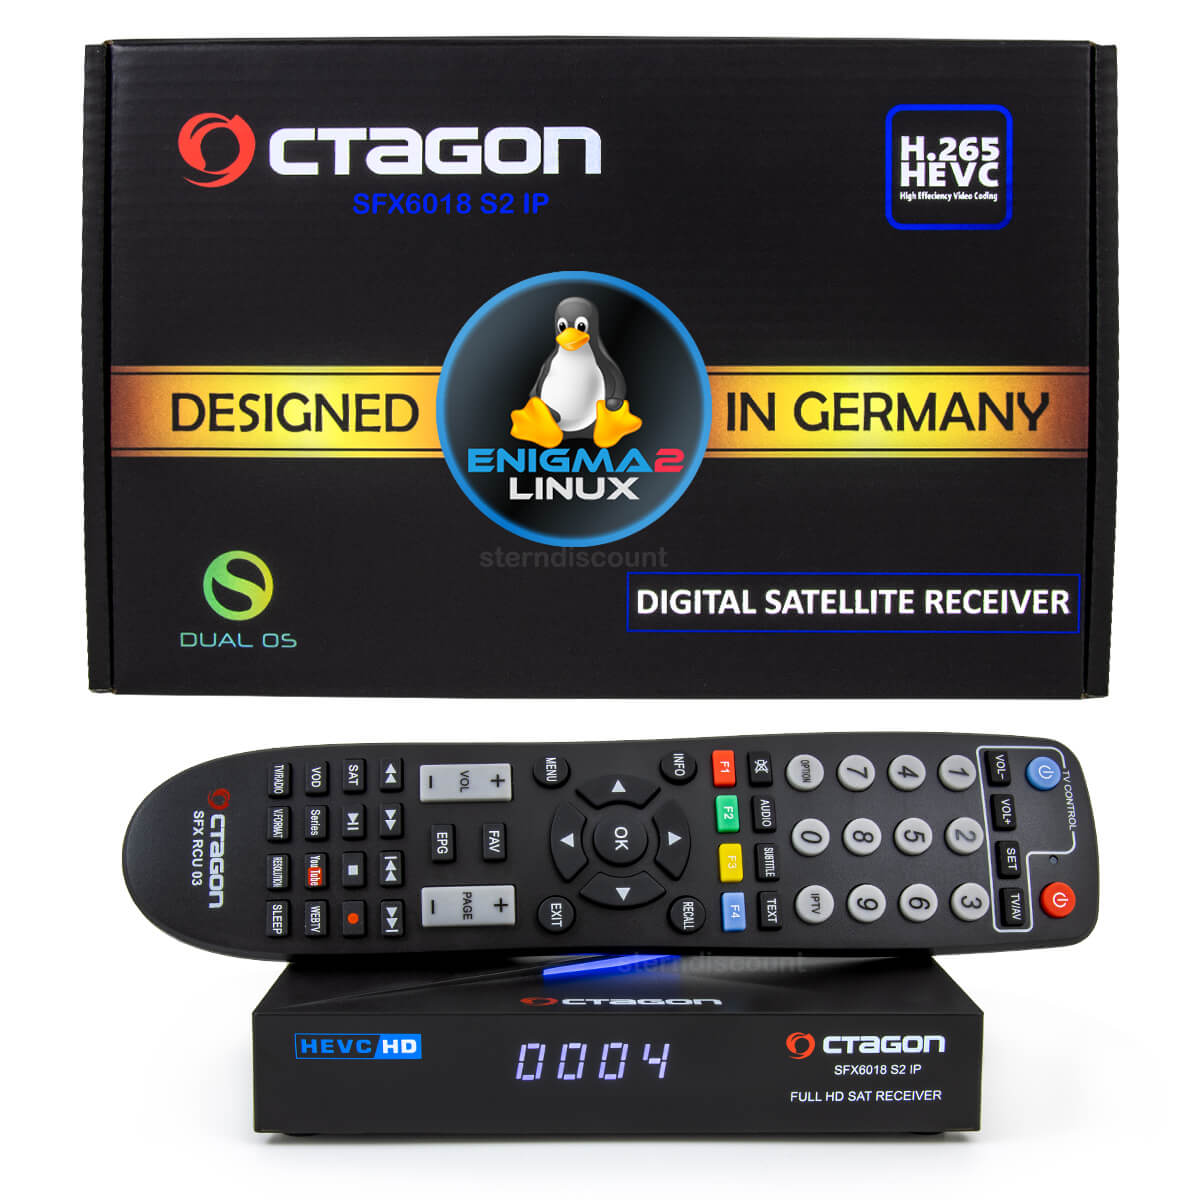 Octagon SFX 6018 S2 IP HD SAT Receiver Linux E2 DVB-s2x